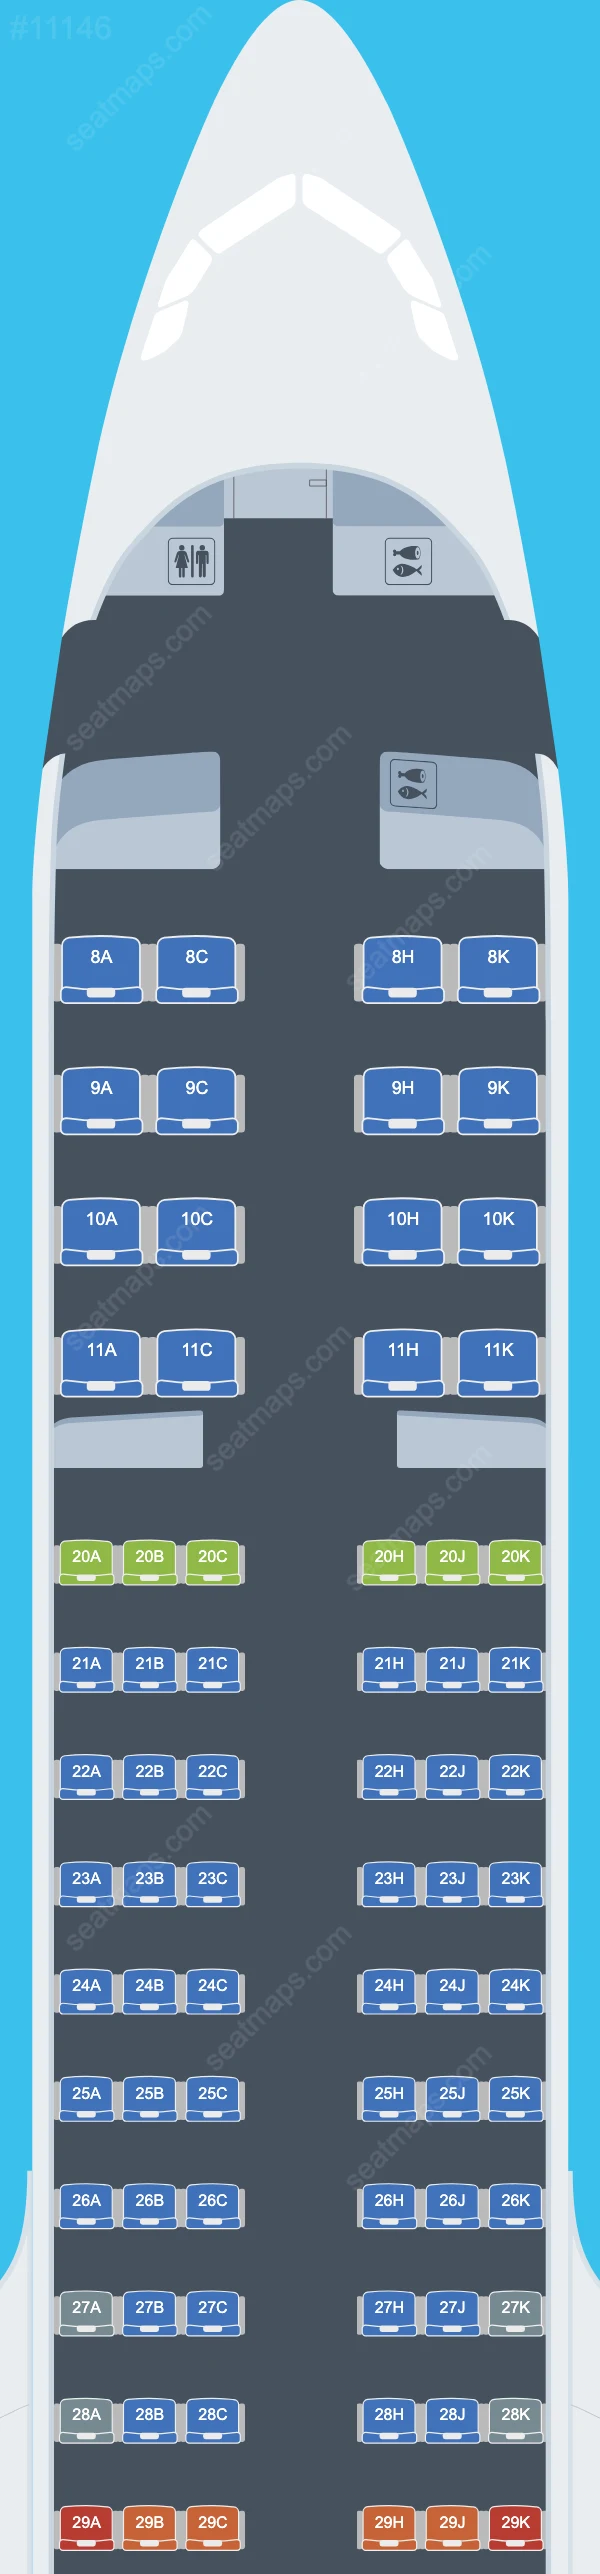 Egyptair Airbus A321neo Sitzplan für Flugzeuge A321neo